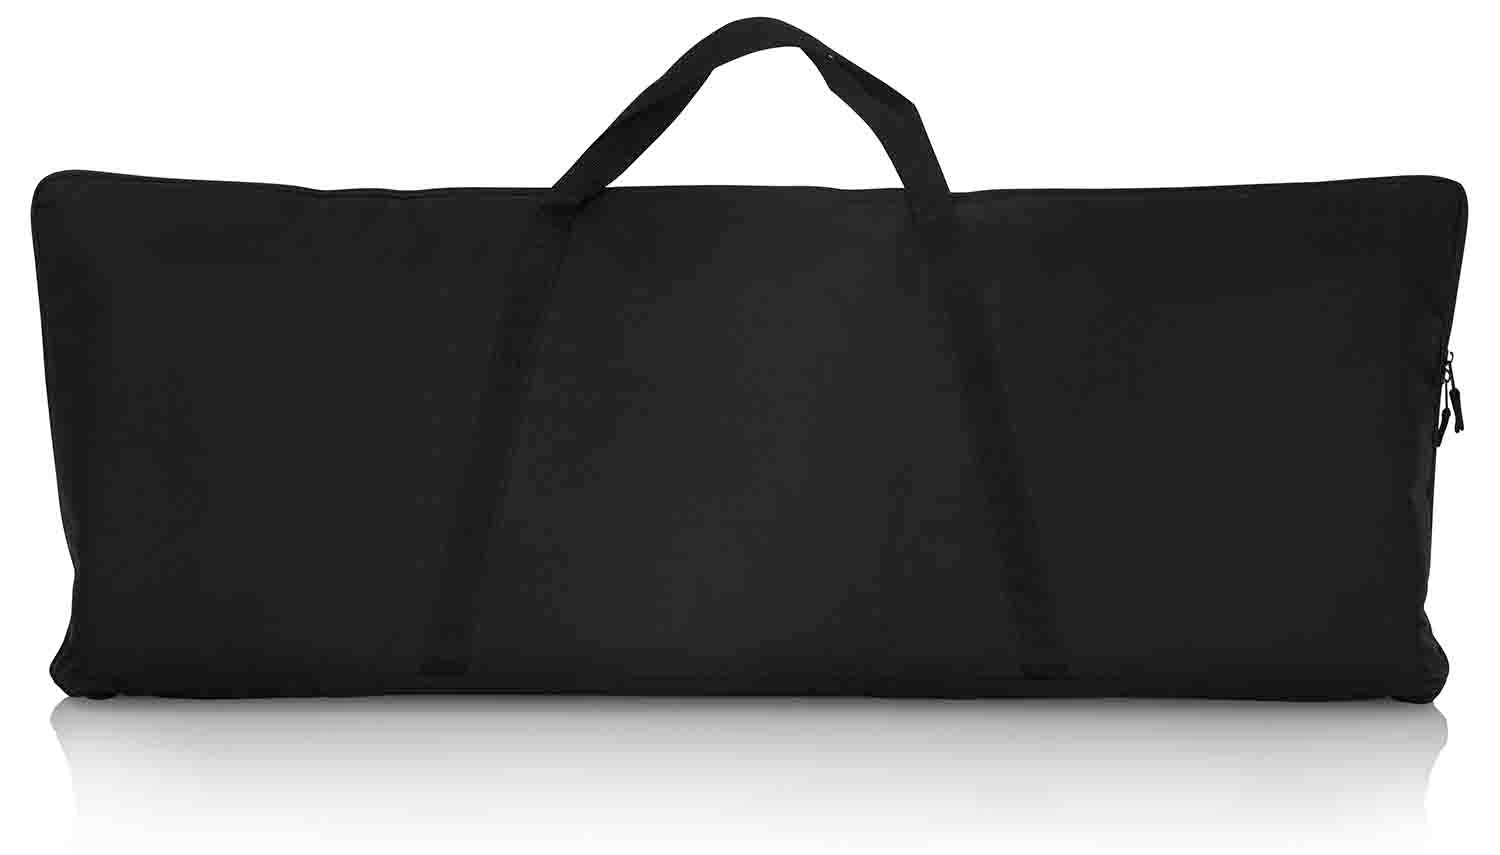 Gator Cases GKBE-76 Economy Gig Bag for 76 Note Keyboards - Hollywood DJ